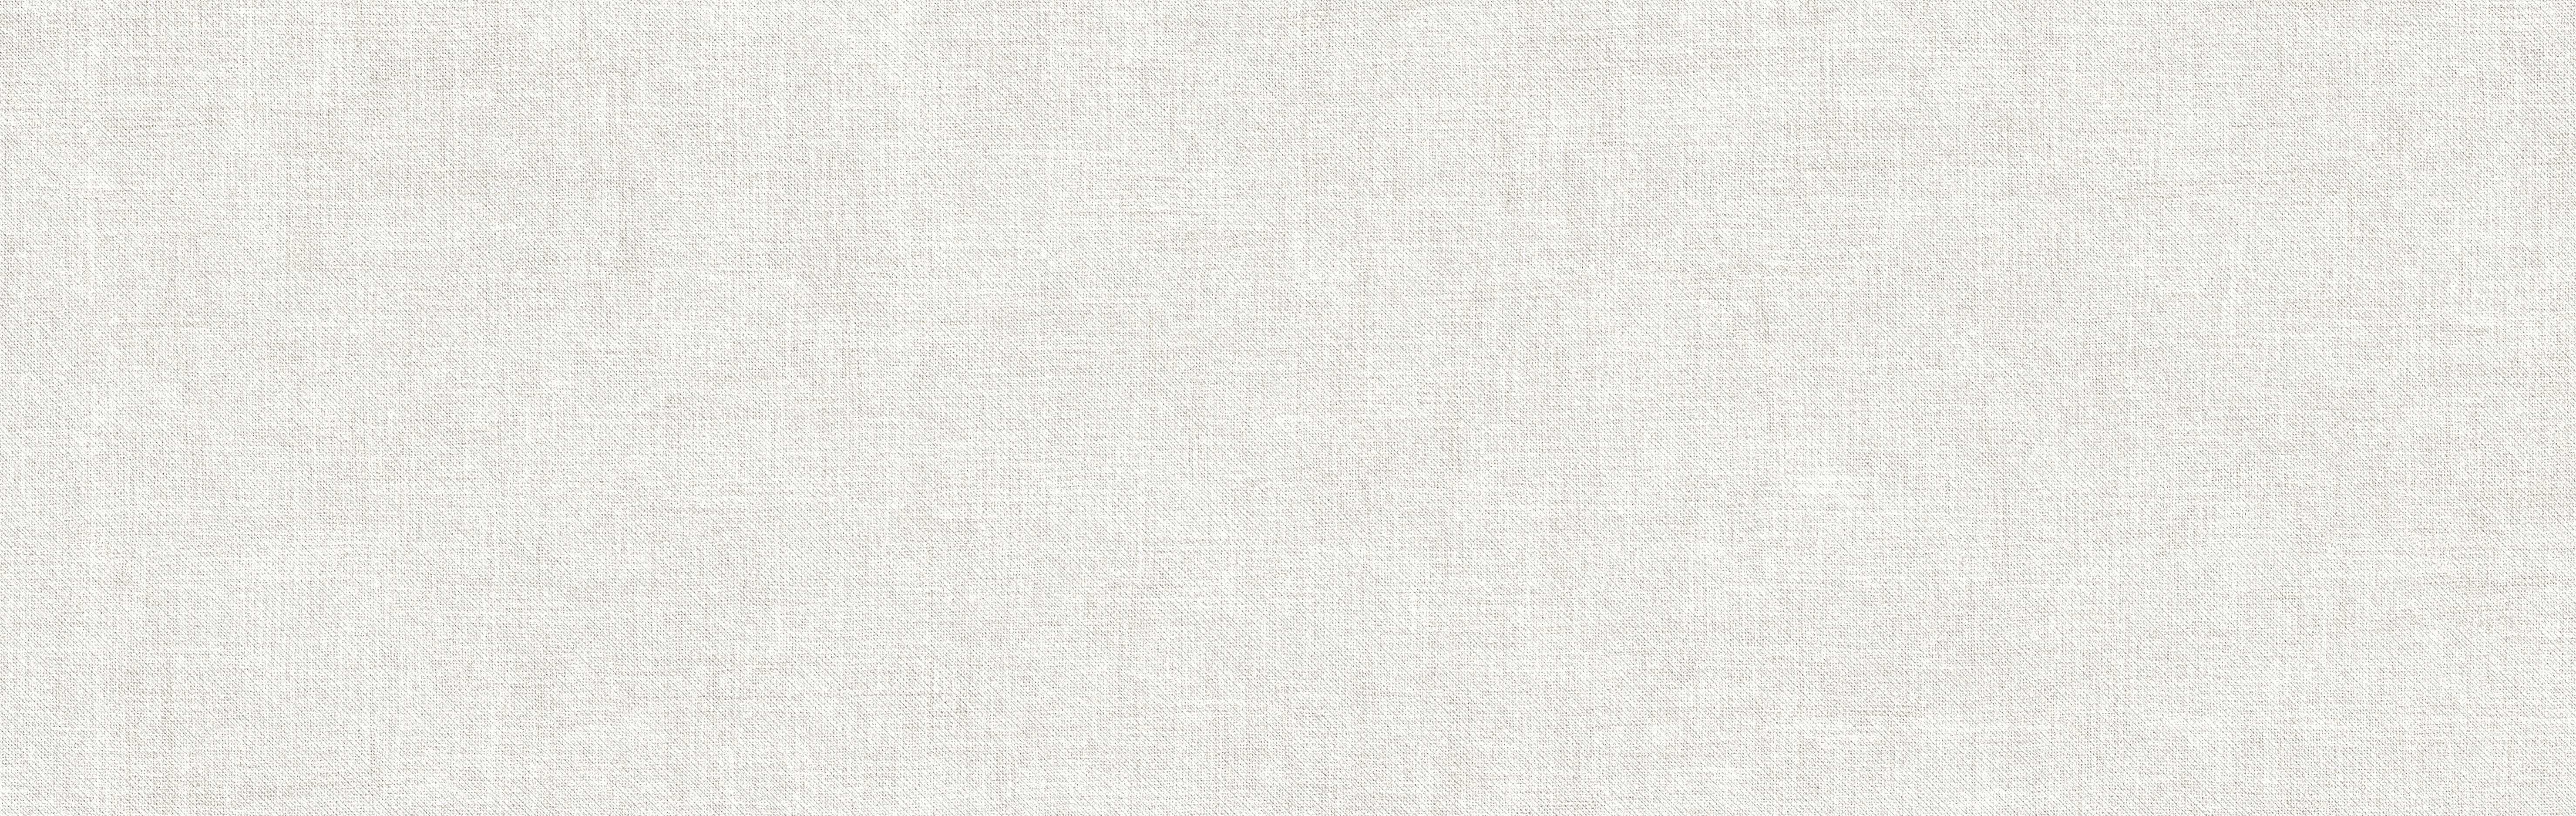 Tailored 13x39 White Matte Ceramic Wall Tile - SAMPLES